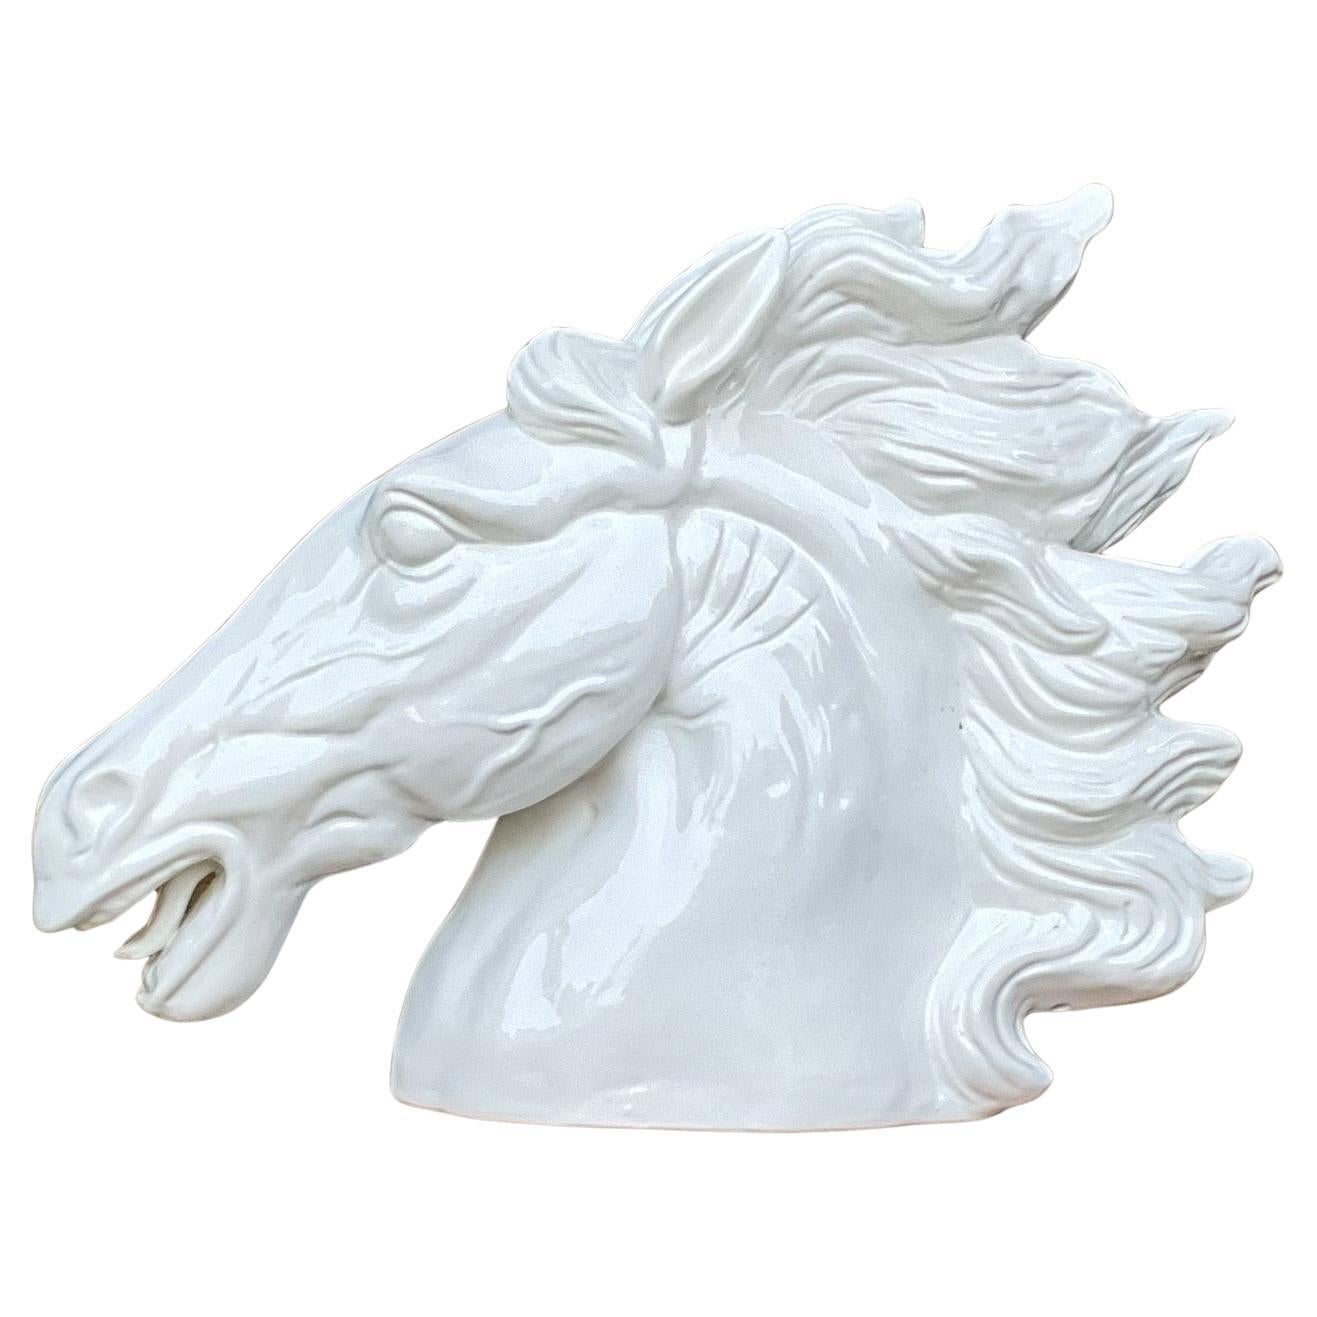 Grande statue de cheval buste en céramique blanche de style néoclassique blanc en vente